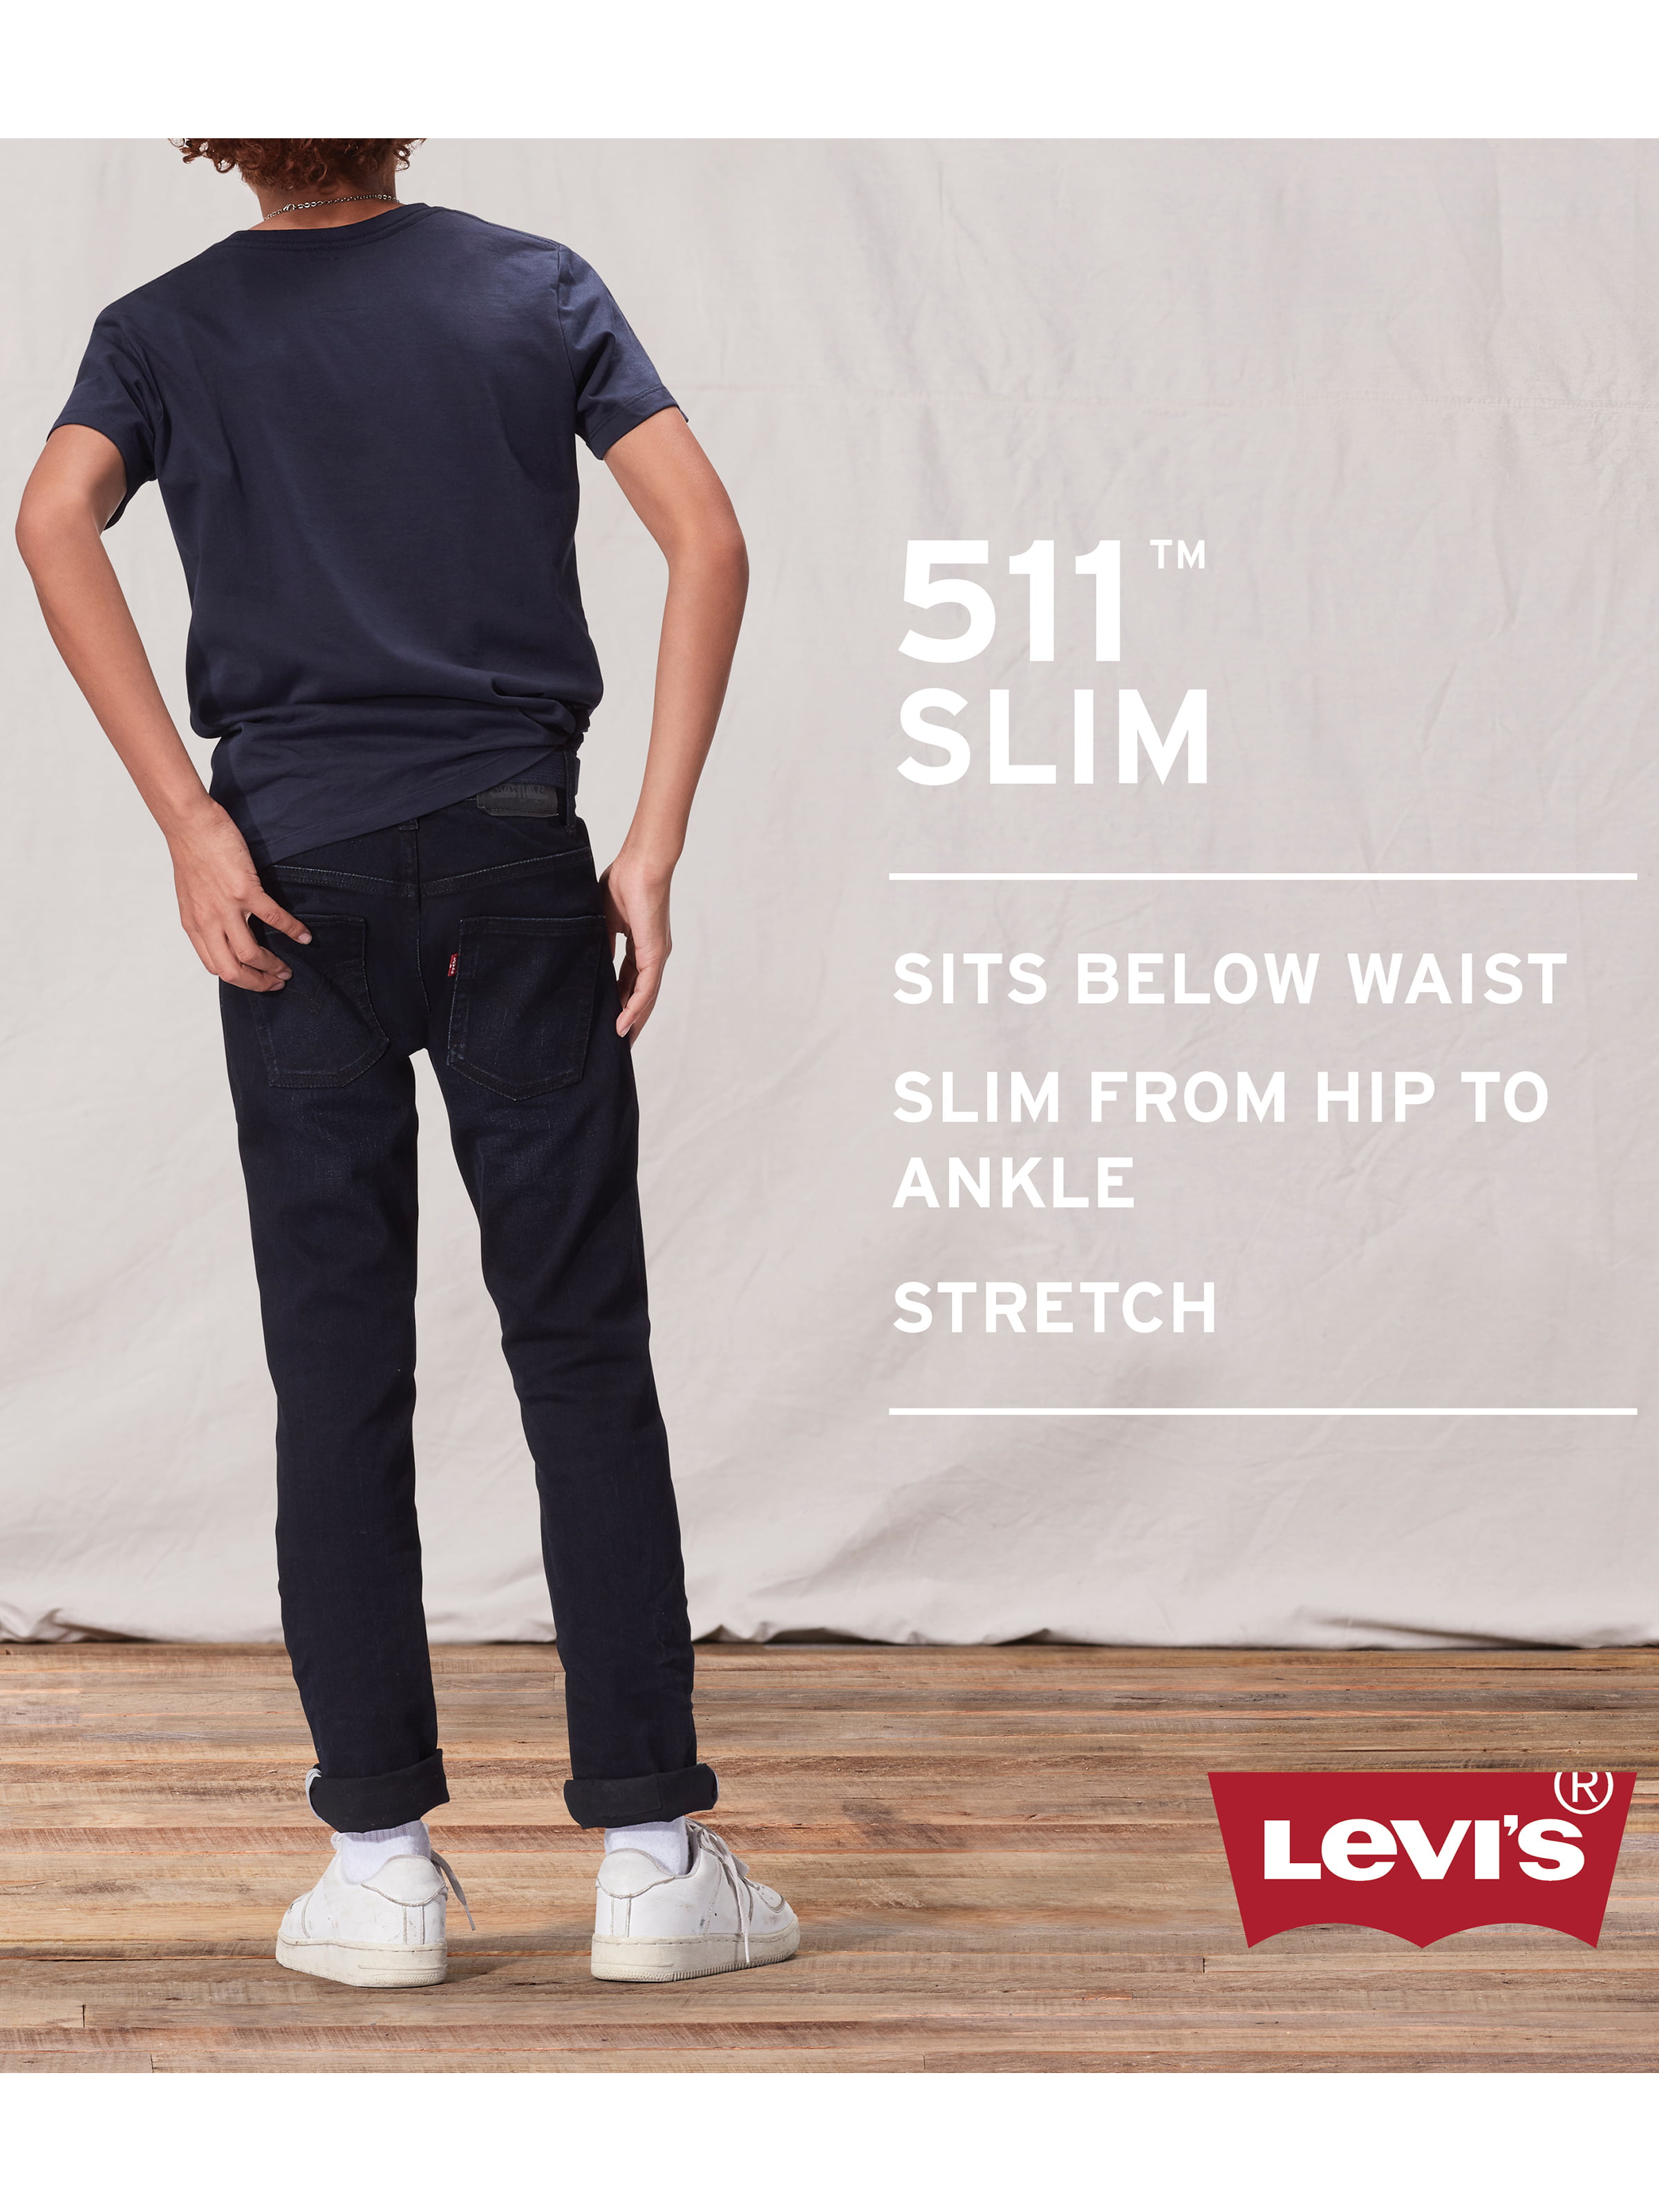 Boys 511 Slim Fit Jeans, Sizes 